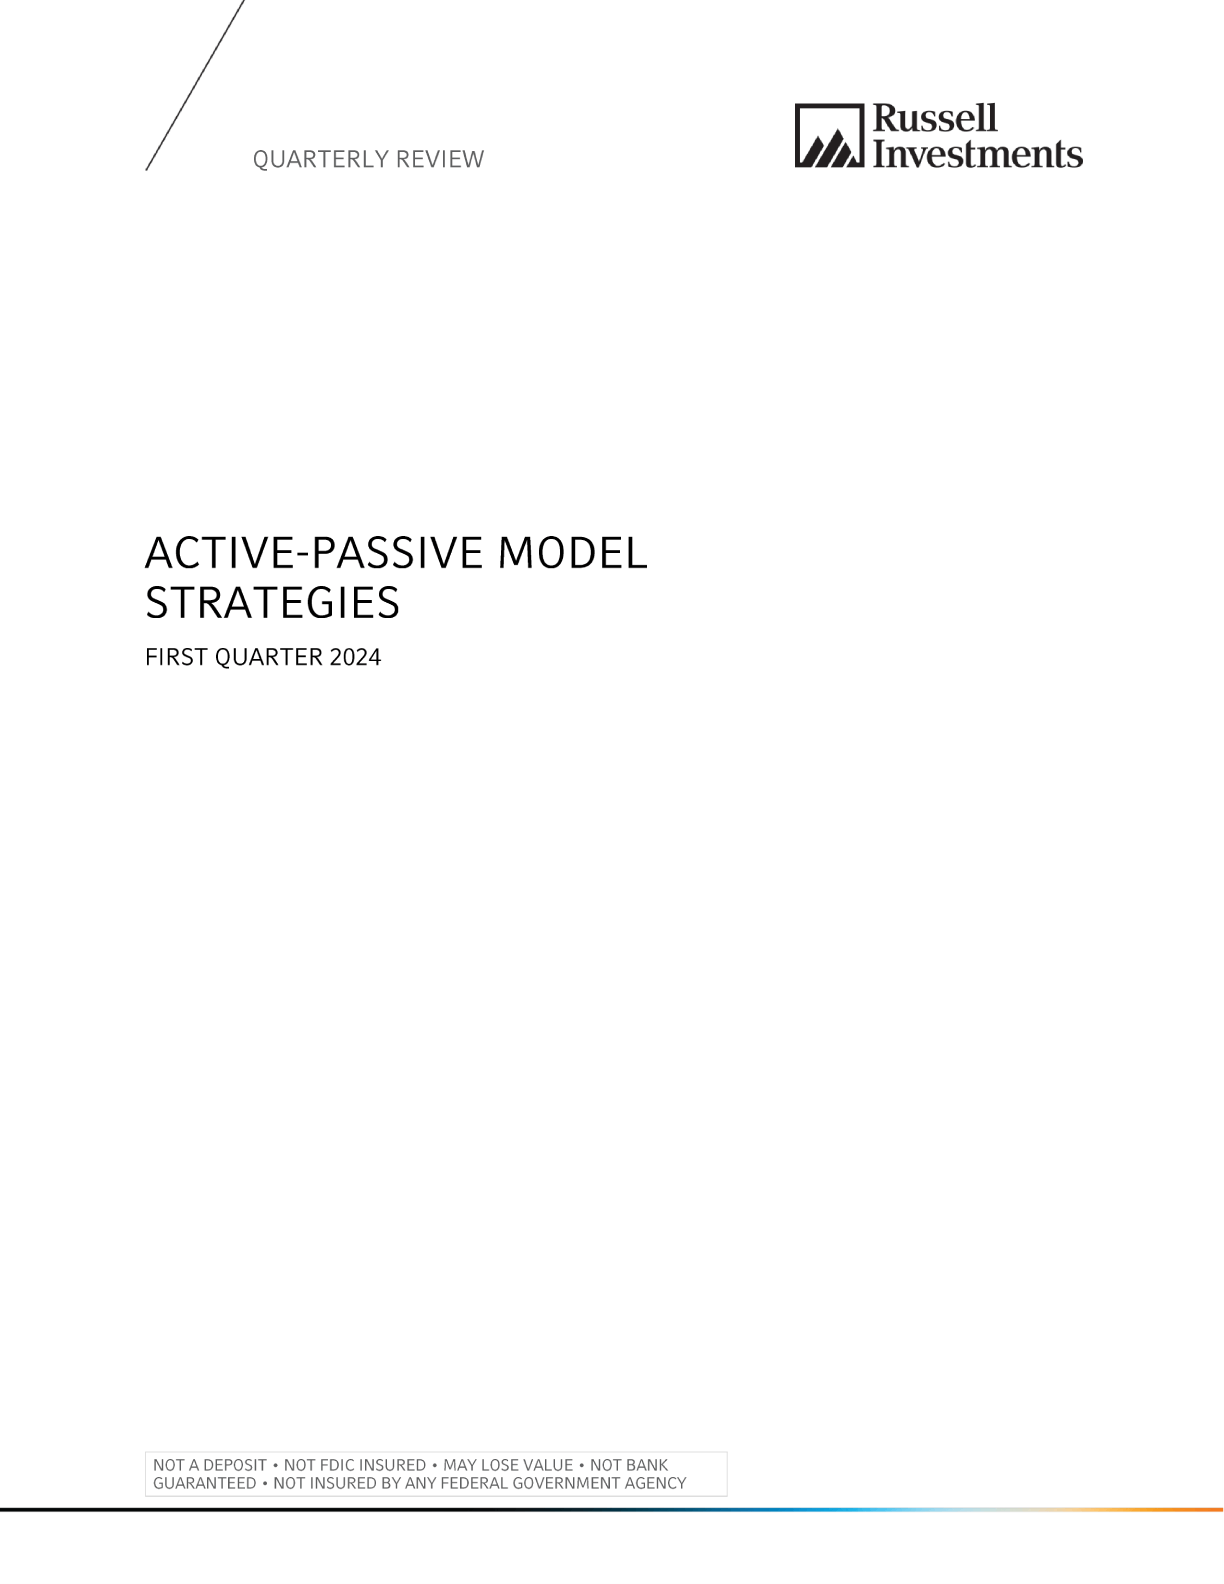 Active-Passive Quarterly Review Thumbnail